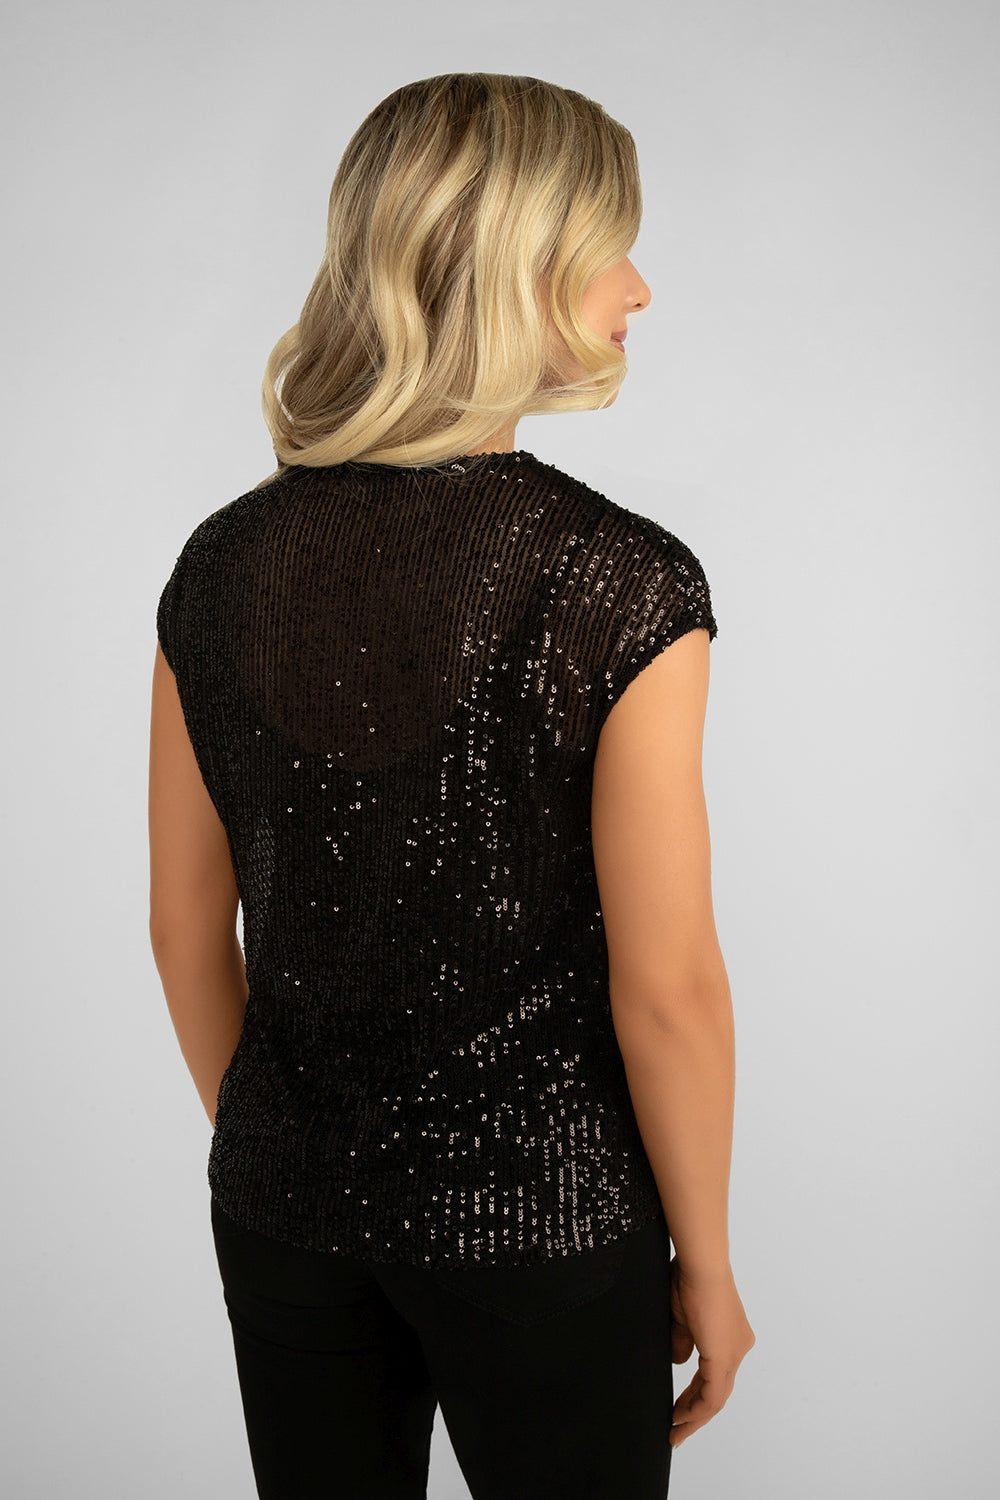 Women's Clothing FRANK LYMAN (234249) Cap Sleeve Sequin Top in BLACK